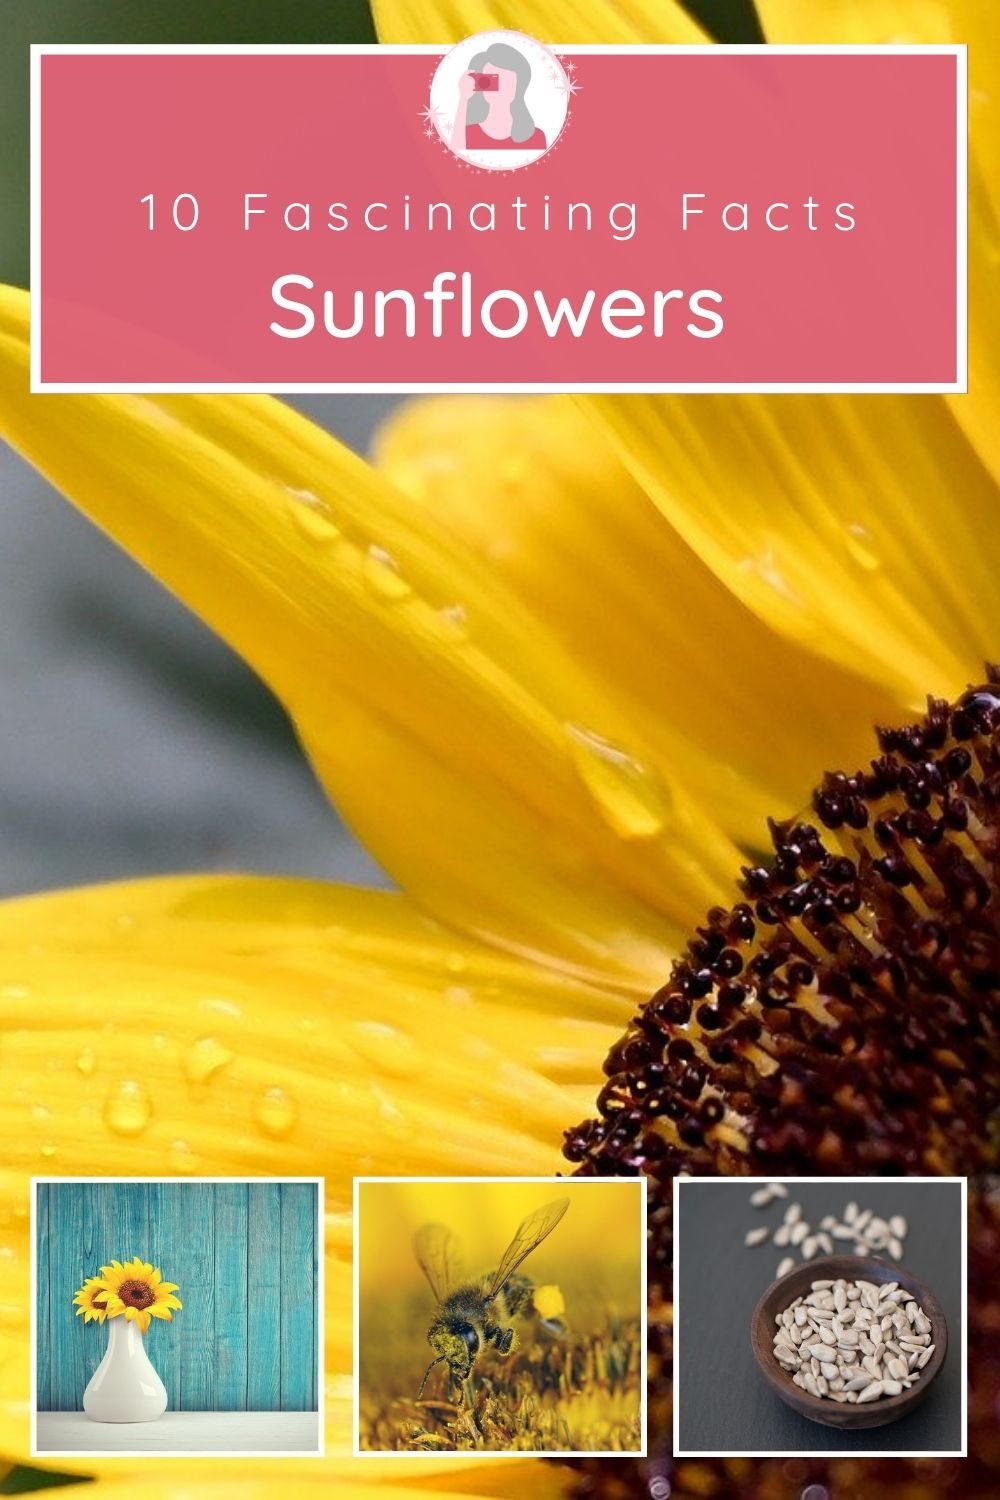 Sunflower Facts - New Pin 1 - JPG